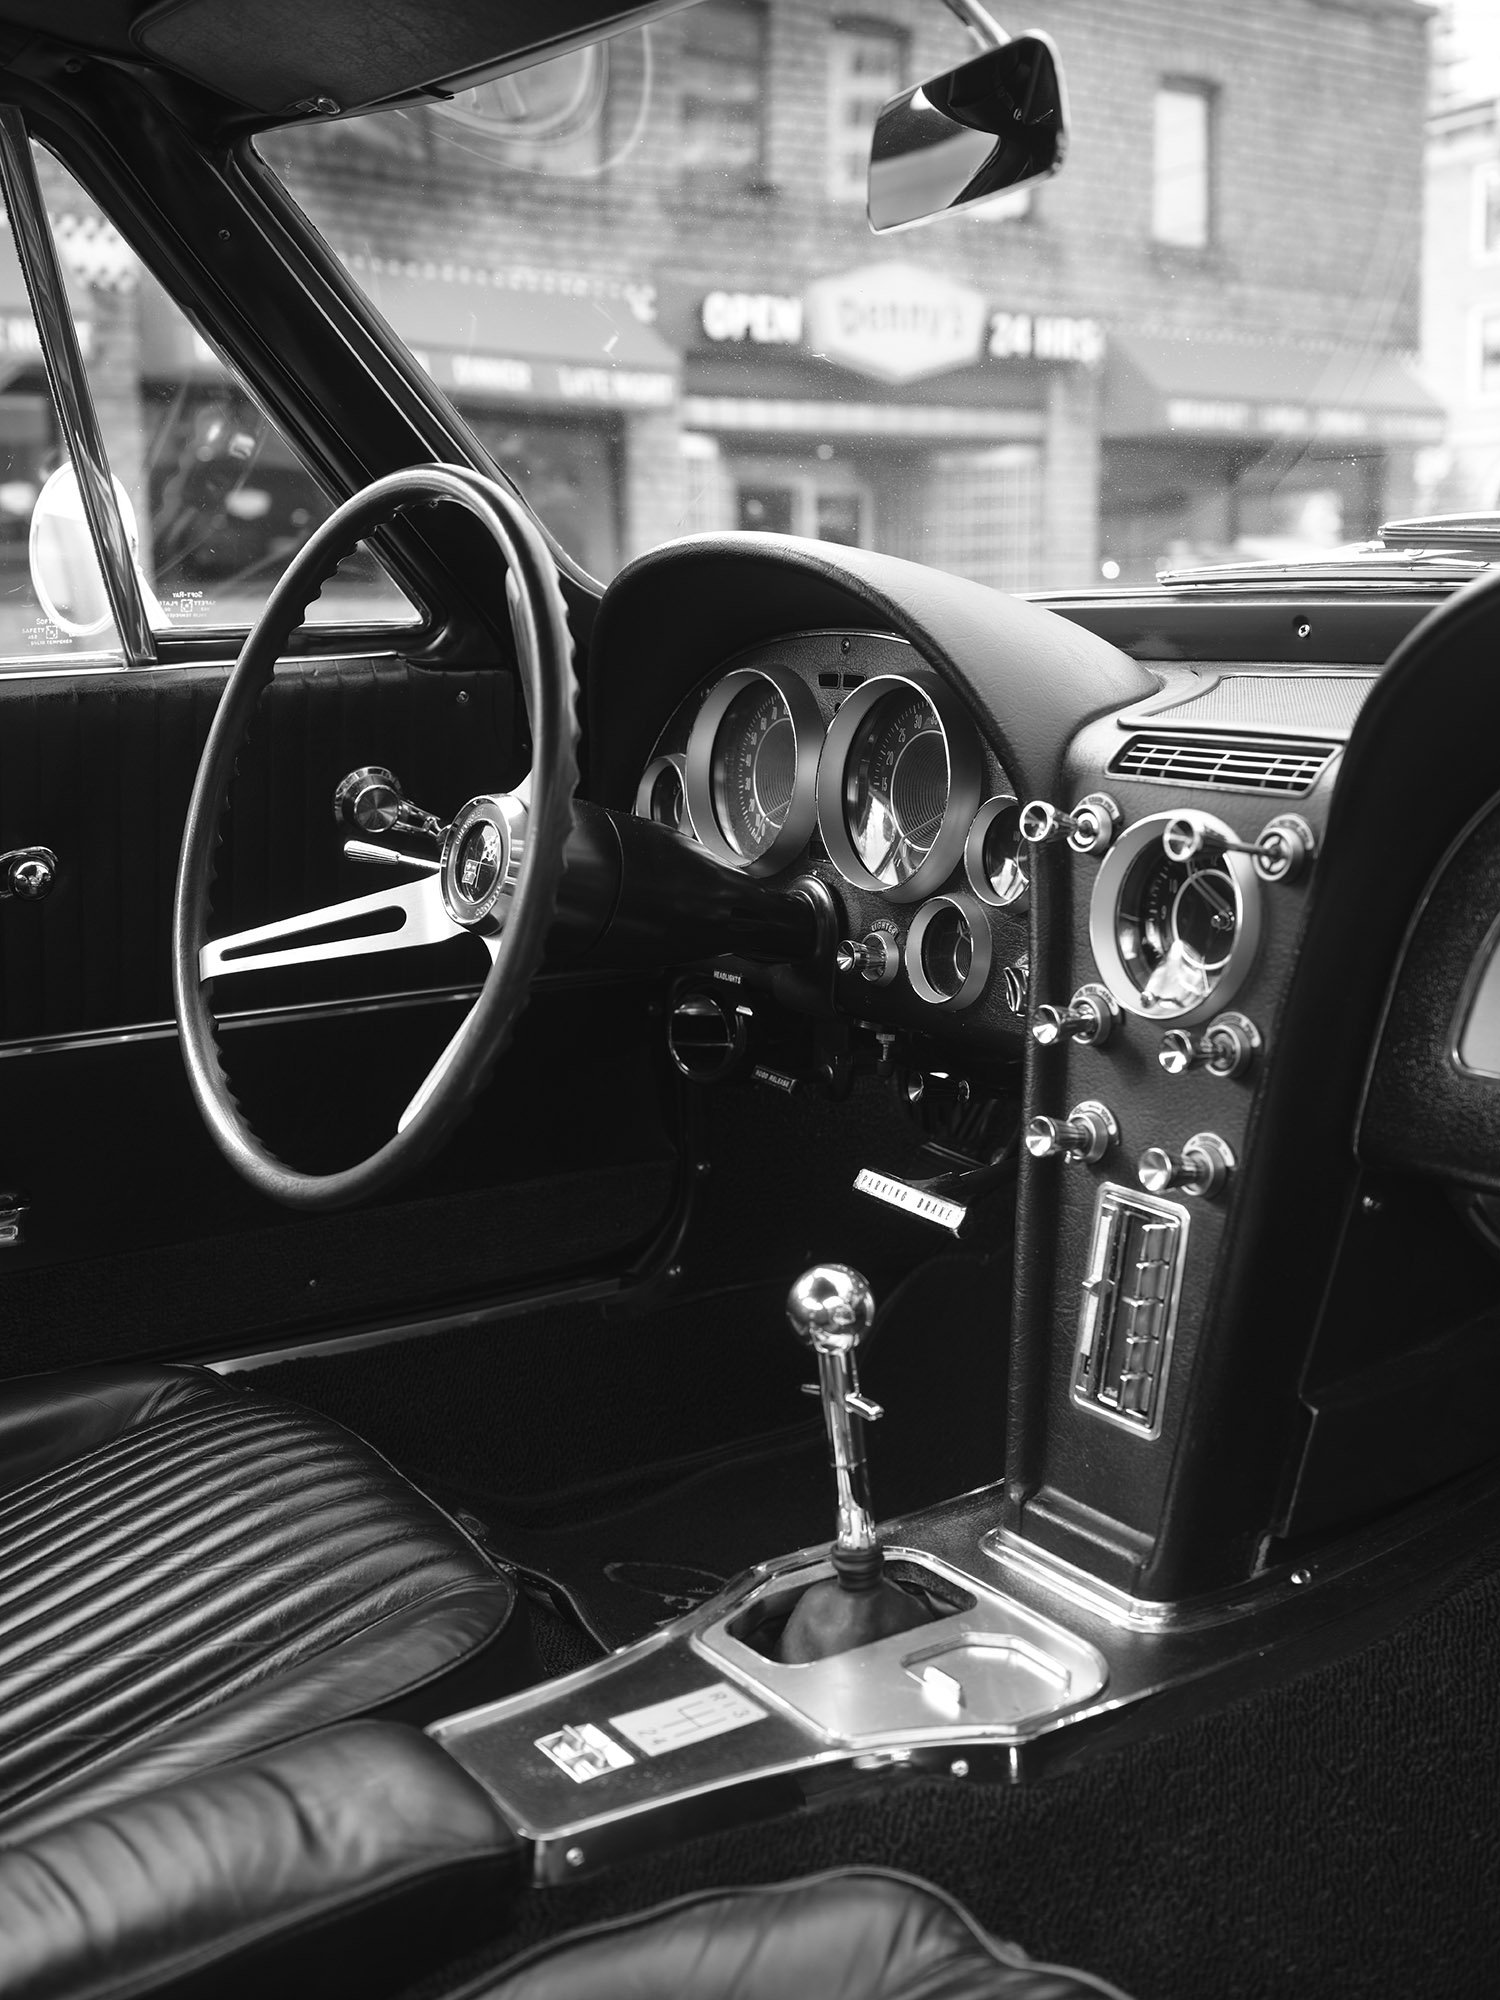 1964 Corvette Stingray interior